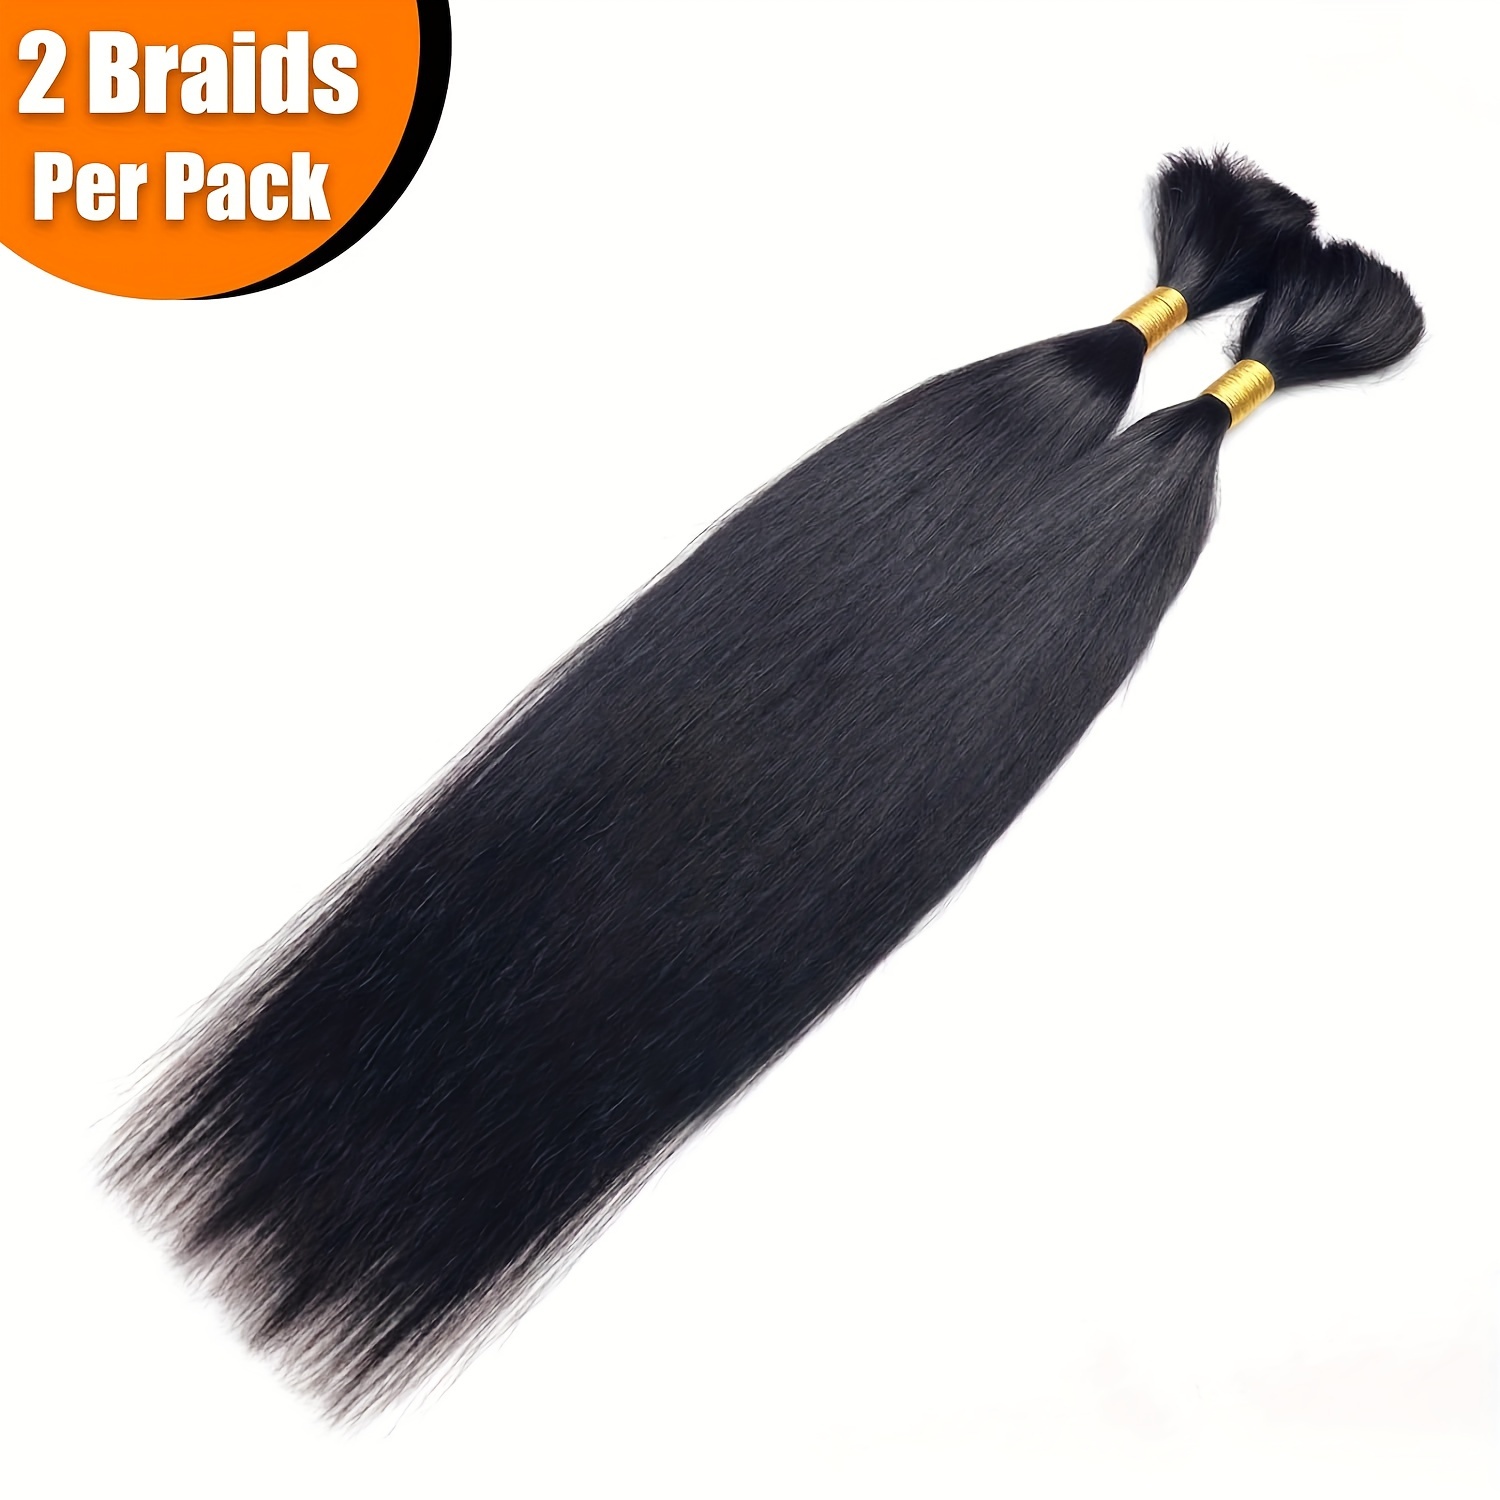 Straight Bulk Human Hair For Braiding No Weft 16-28inch  3.53oz(2bundles/1pack) Unprocessed Brazilian Virgin Human Hair Bulk For  Micro Braids Wet And